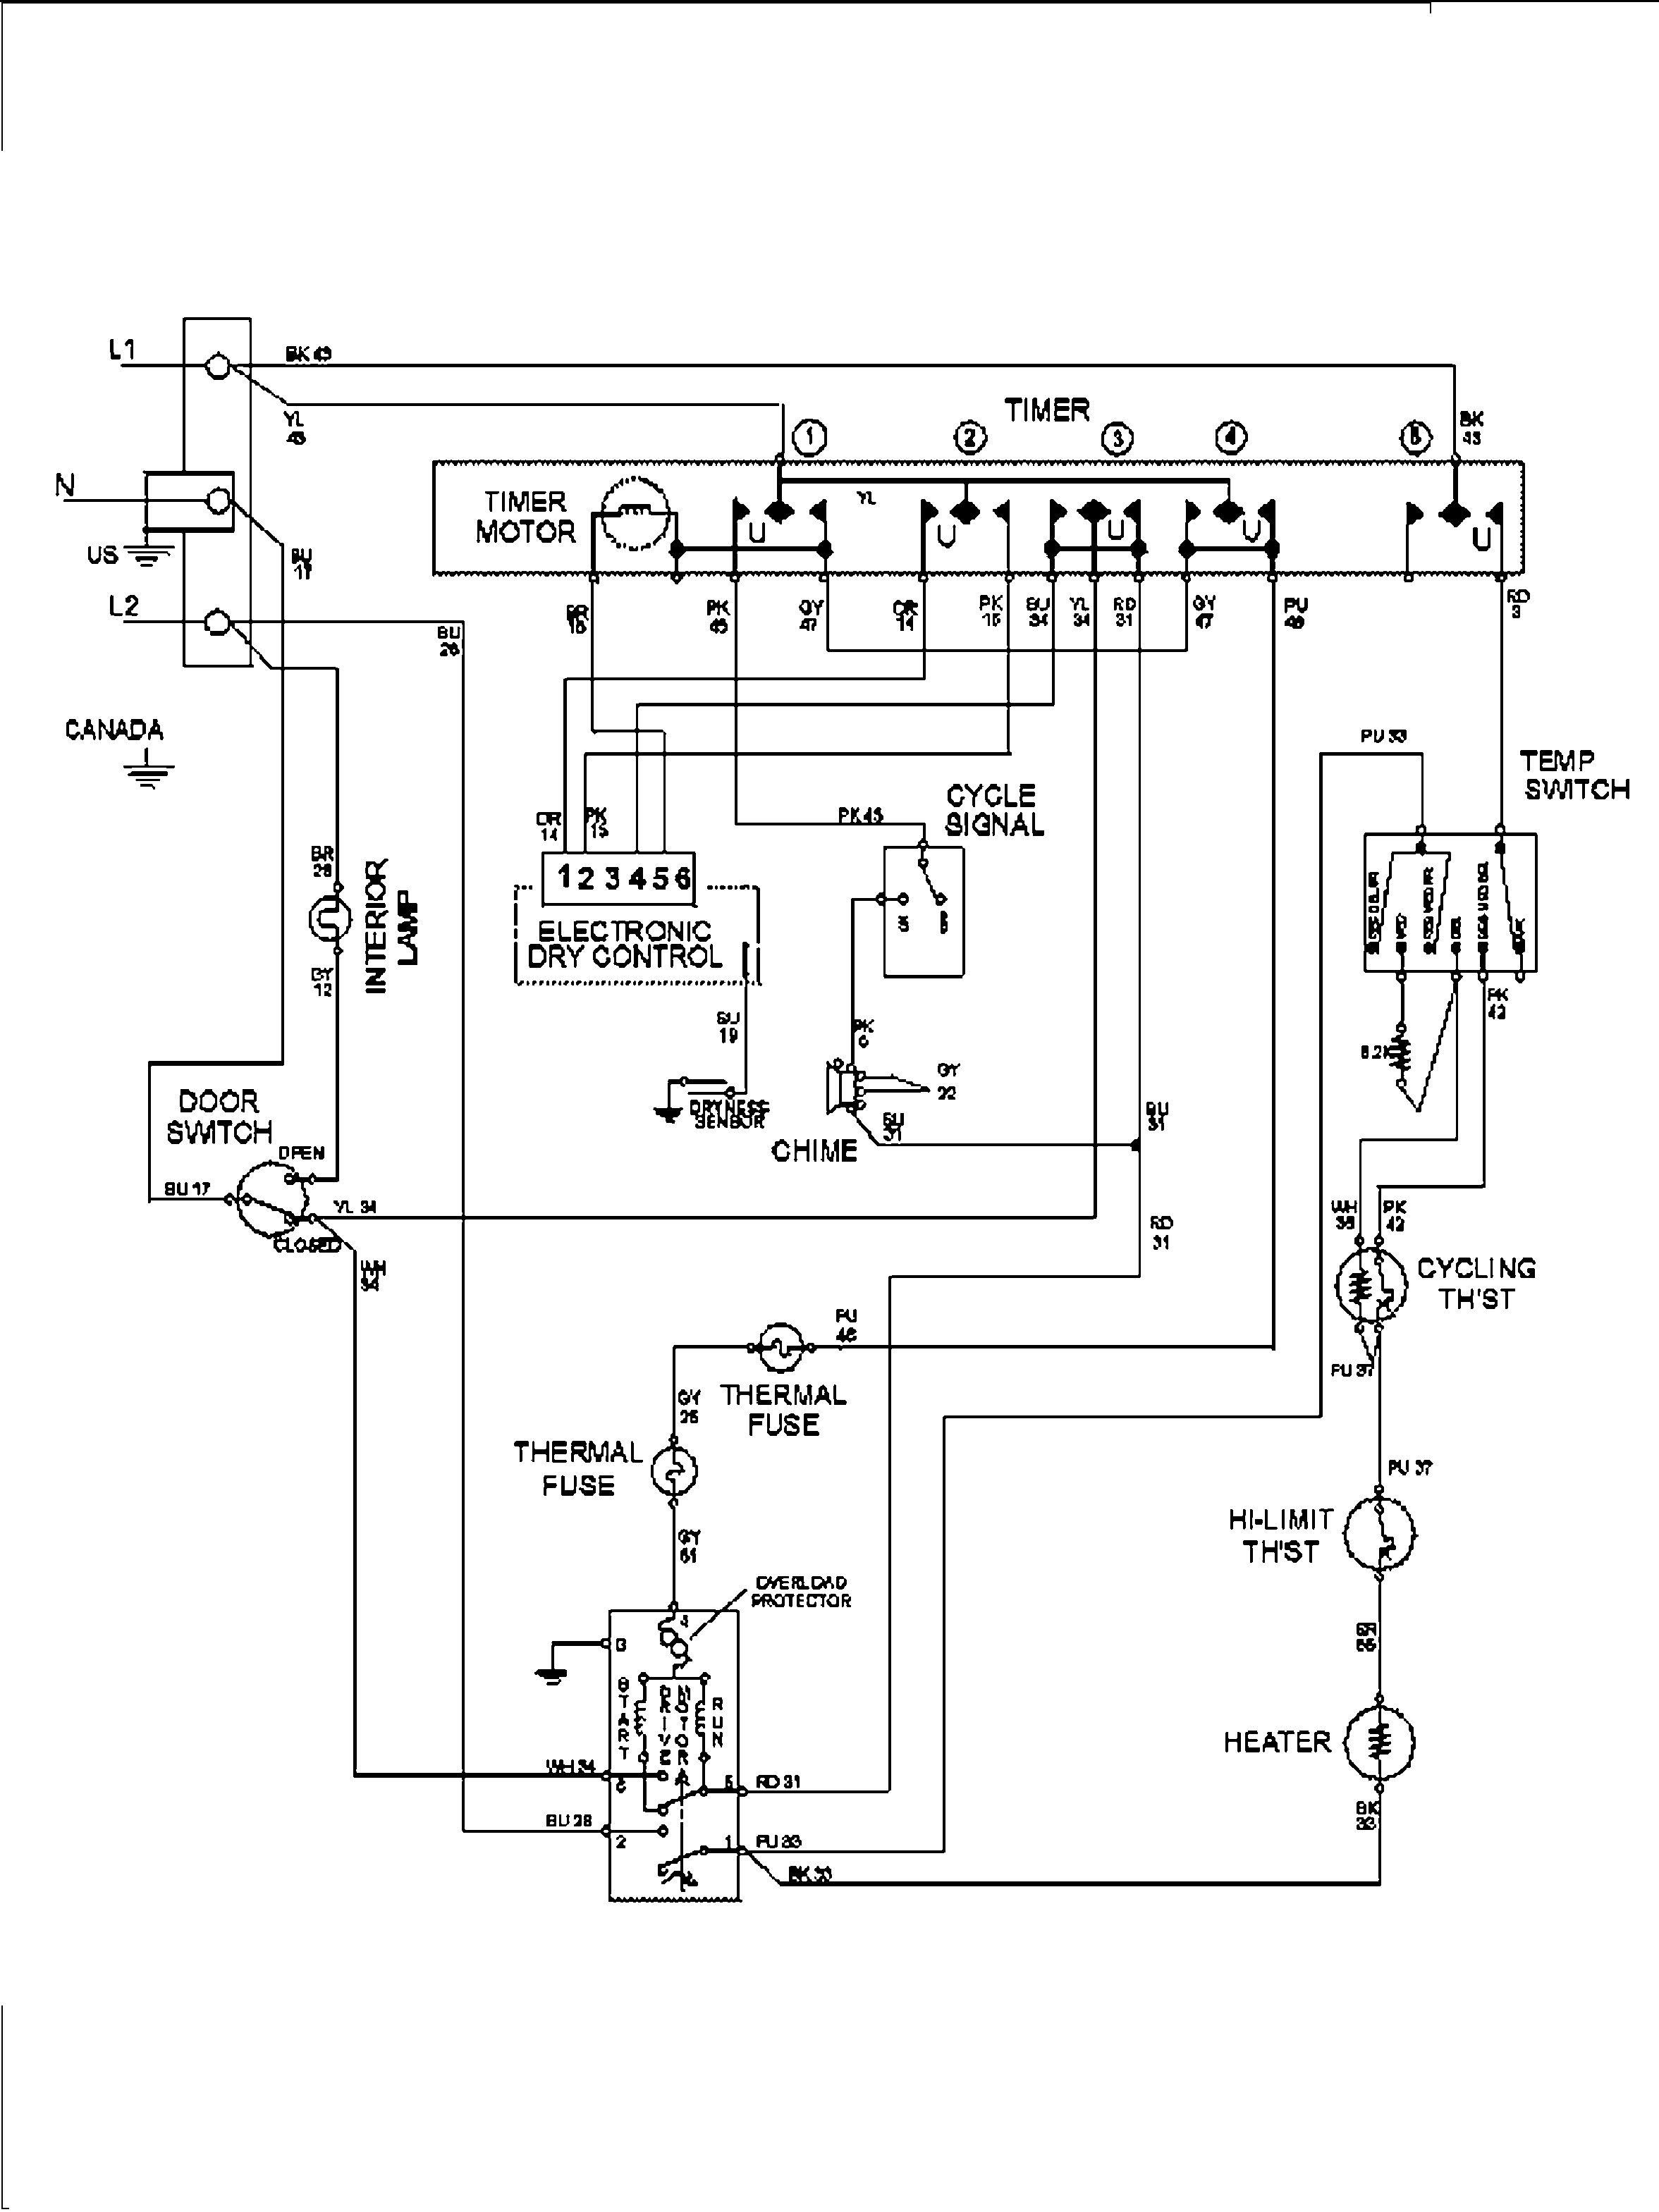 Wiring Diagram Maytag Dryer Motor